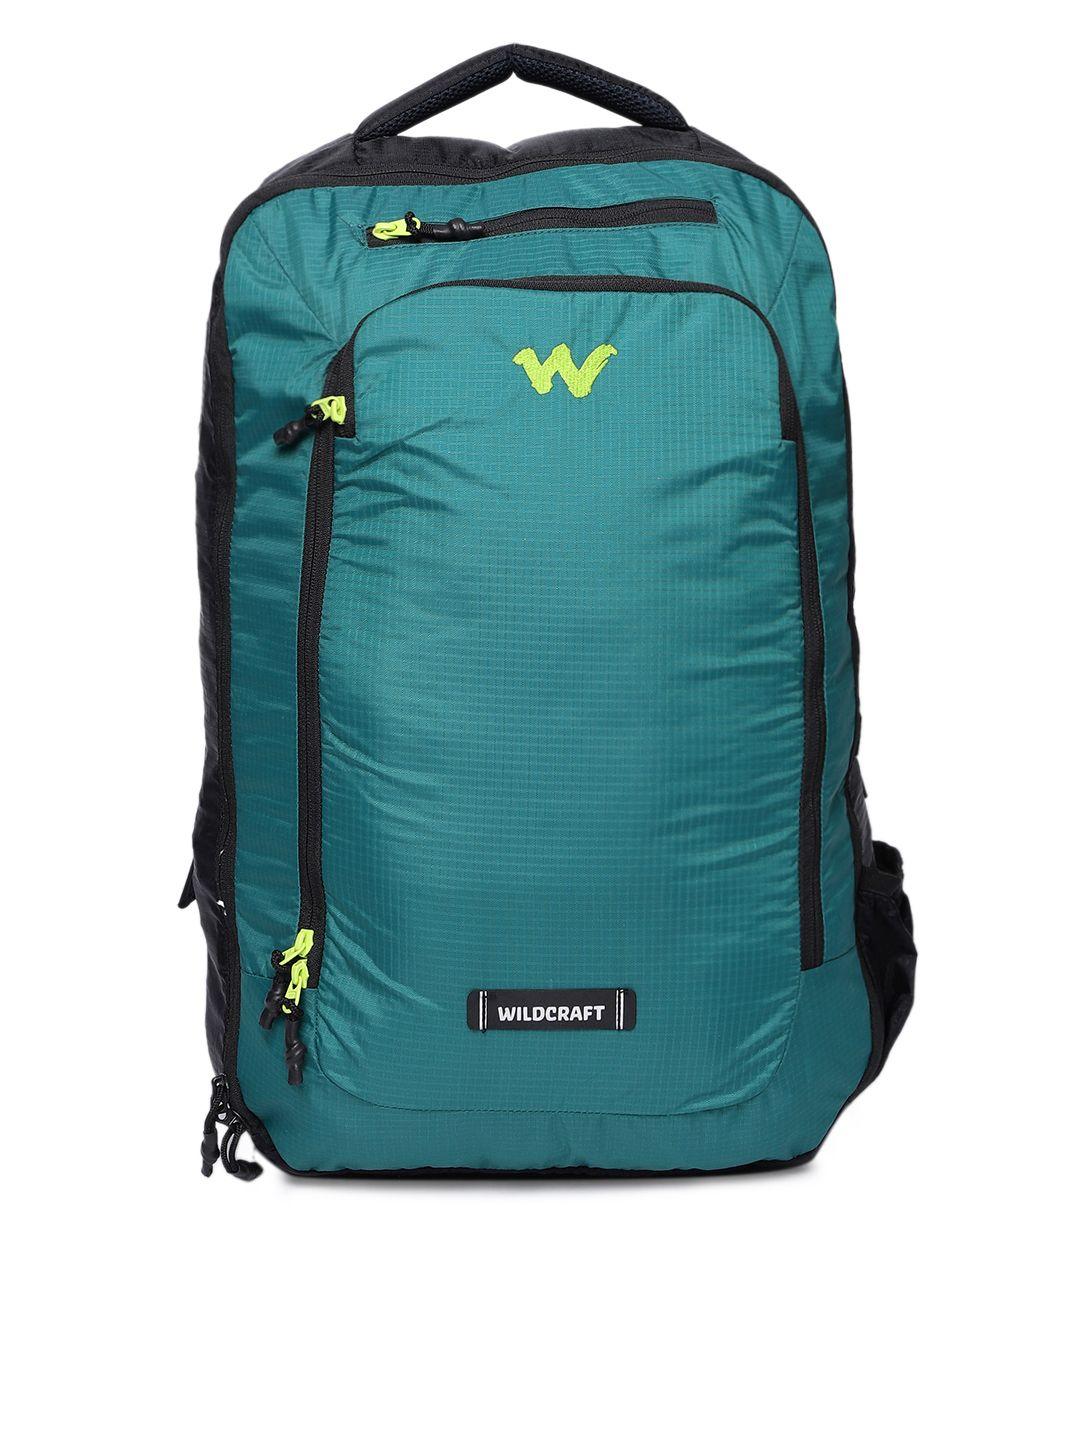 wildcraft unisex teal solid backpack